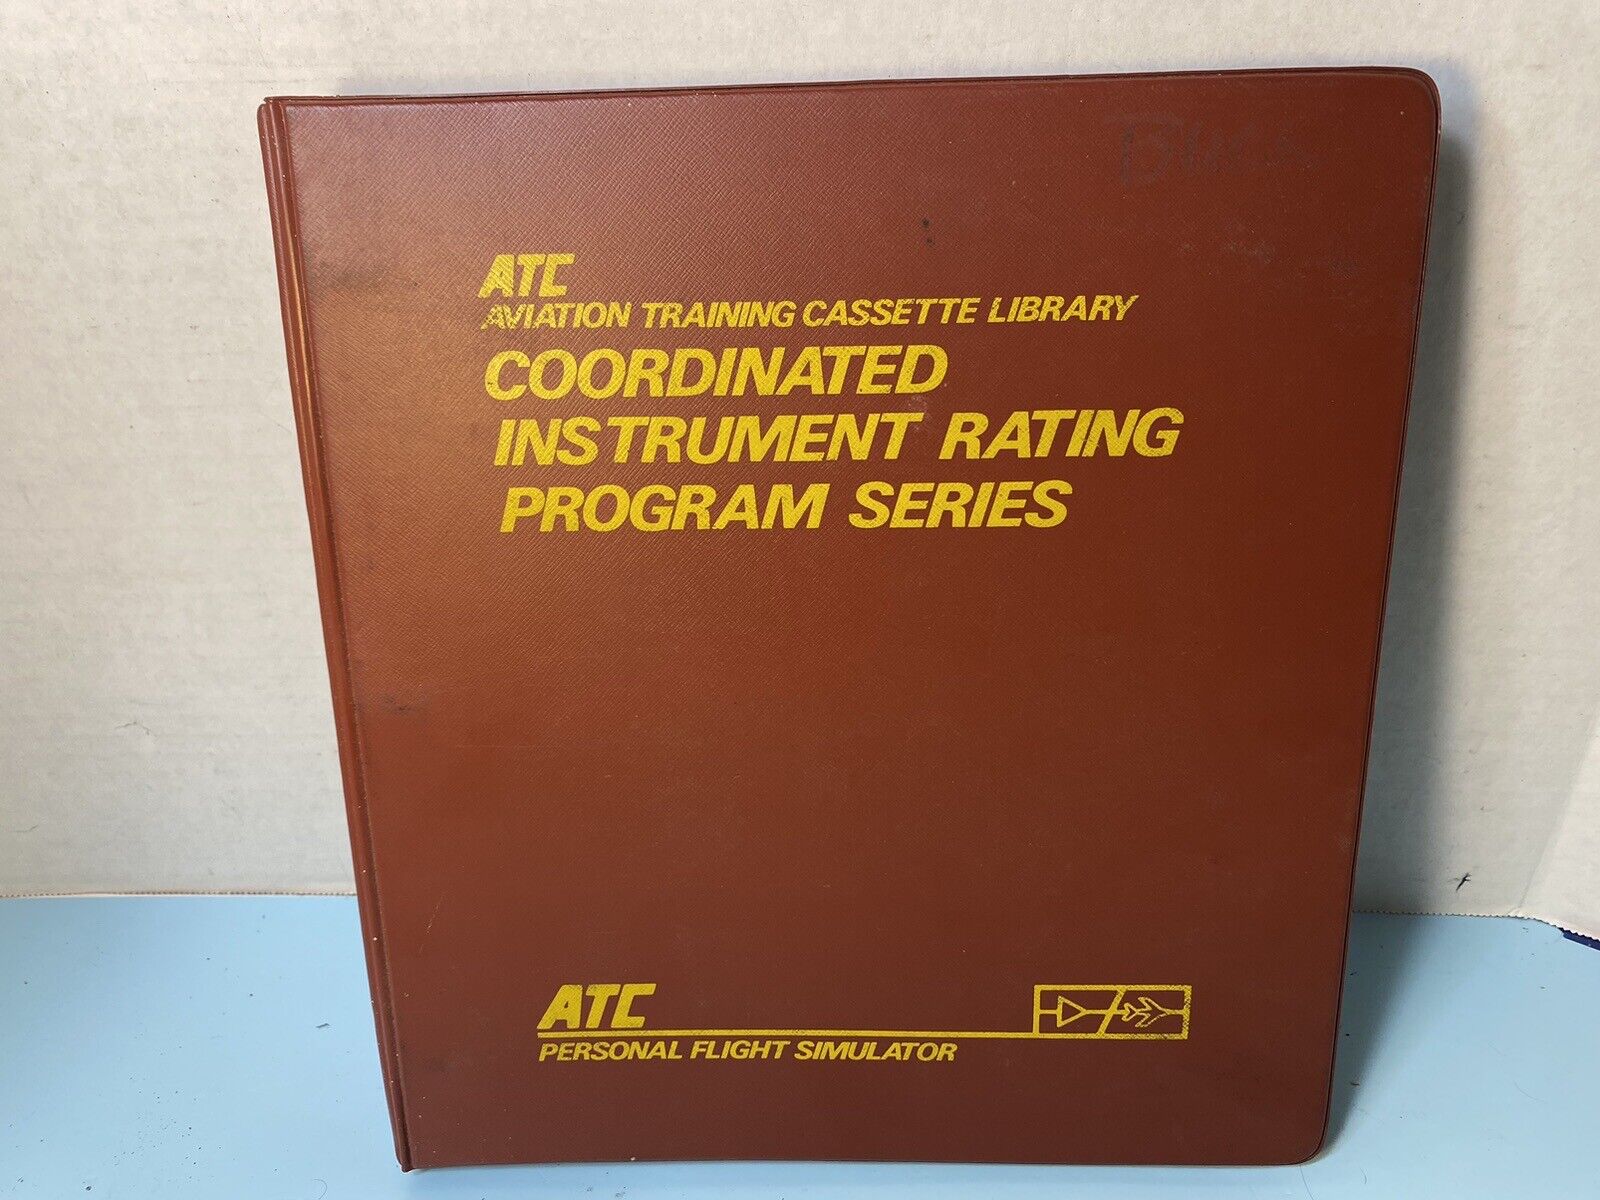 ATC-610 Personal Flight Simulator Aviation Training Cassette Library Tapes 1979